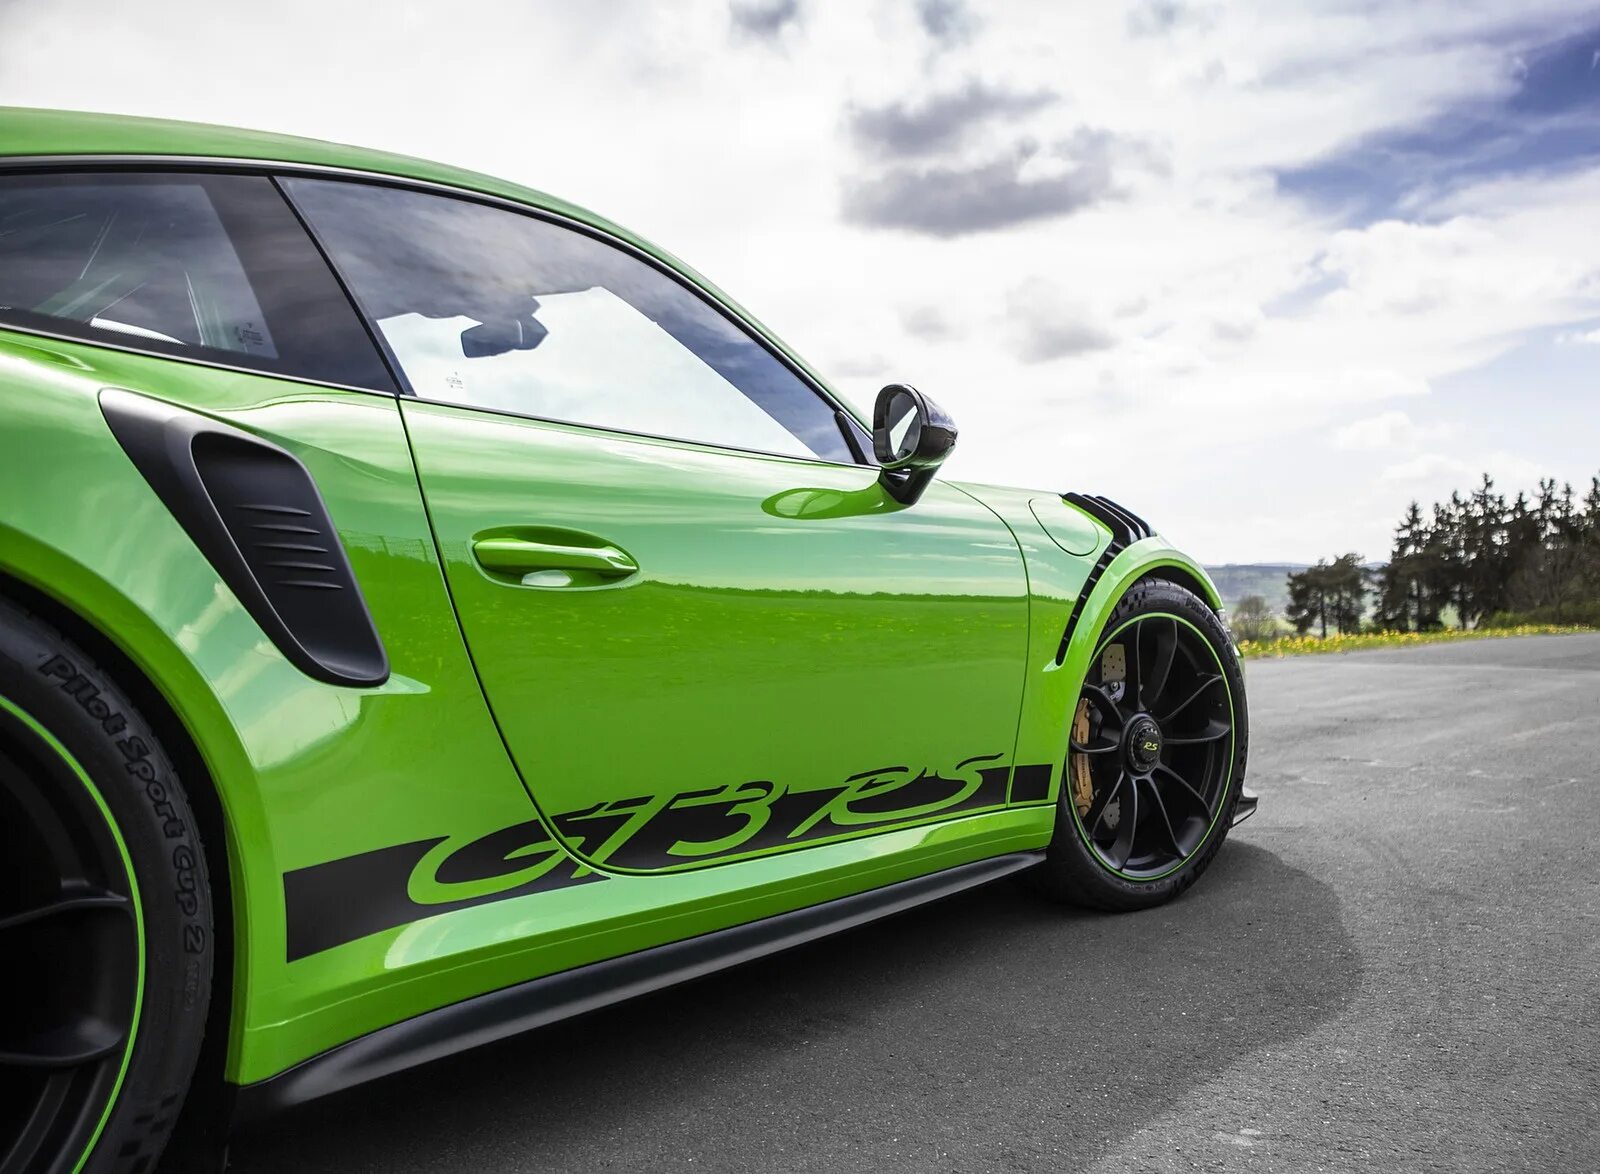 Porsche 911 gt3 RS зеленый. Porsche gt3 RS. Порше гт3 2019 салатовый. Зеленый Порше ГТ 2 РС.